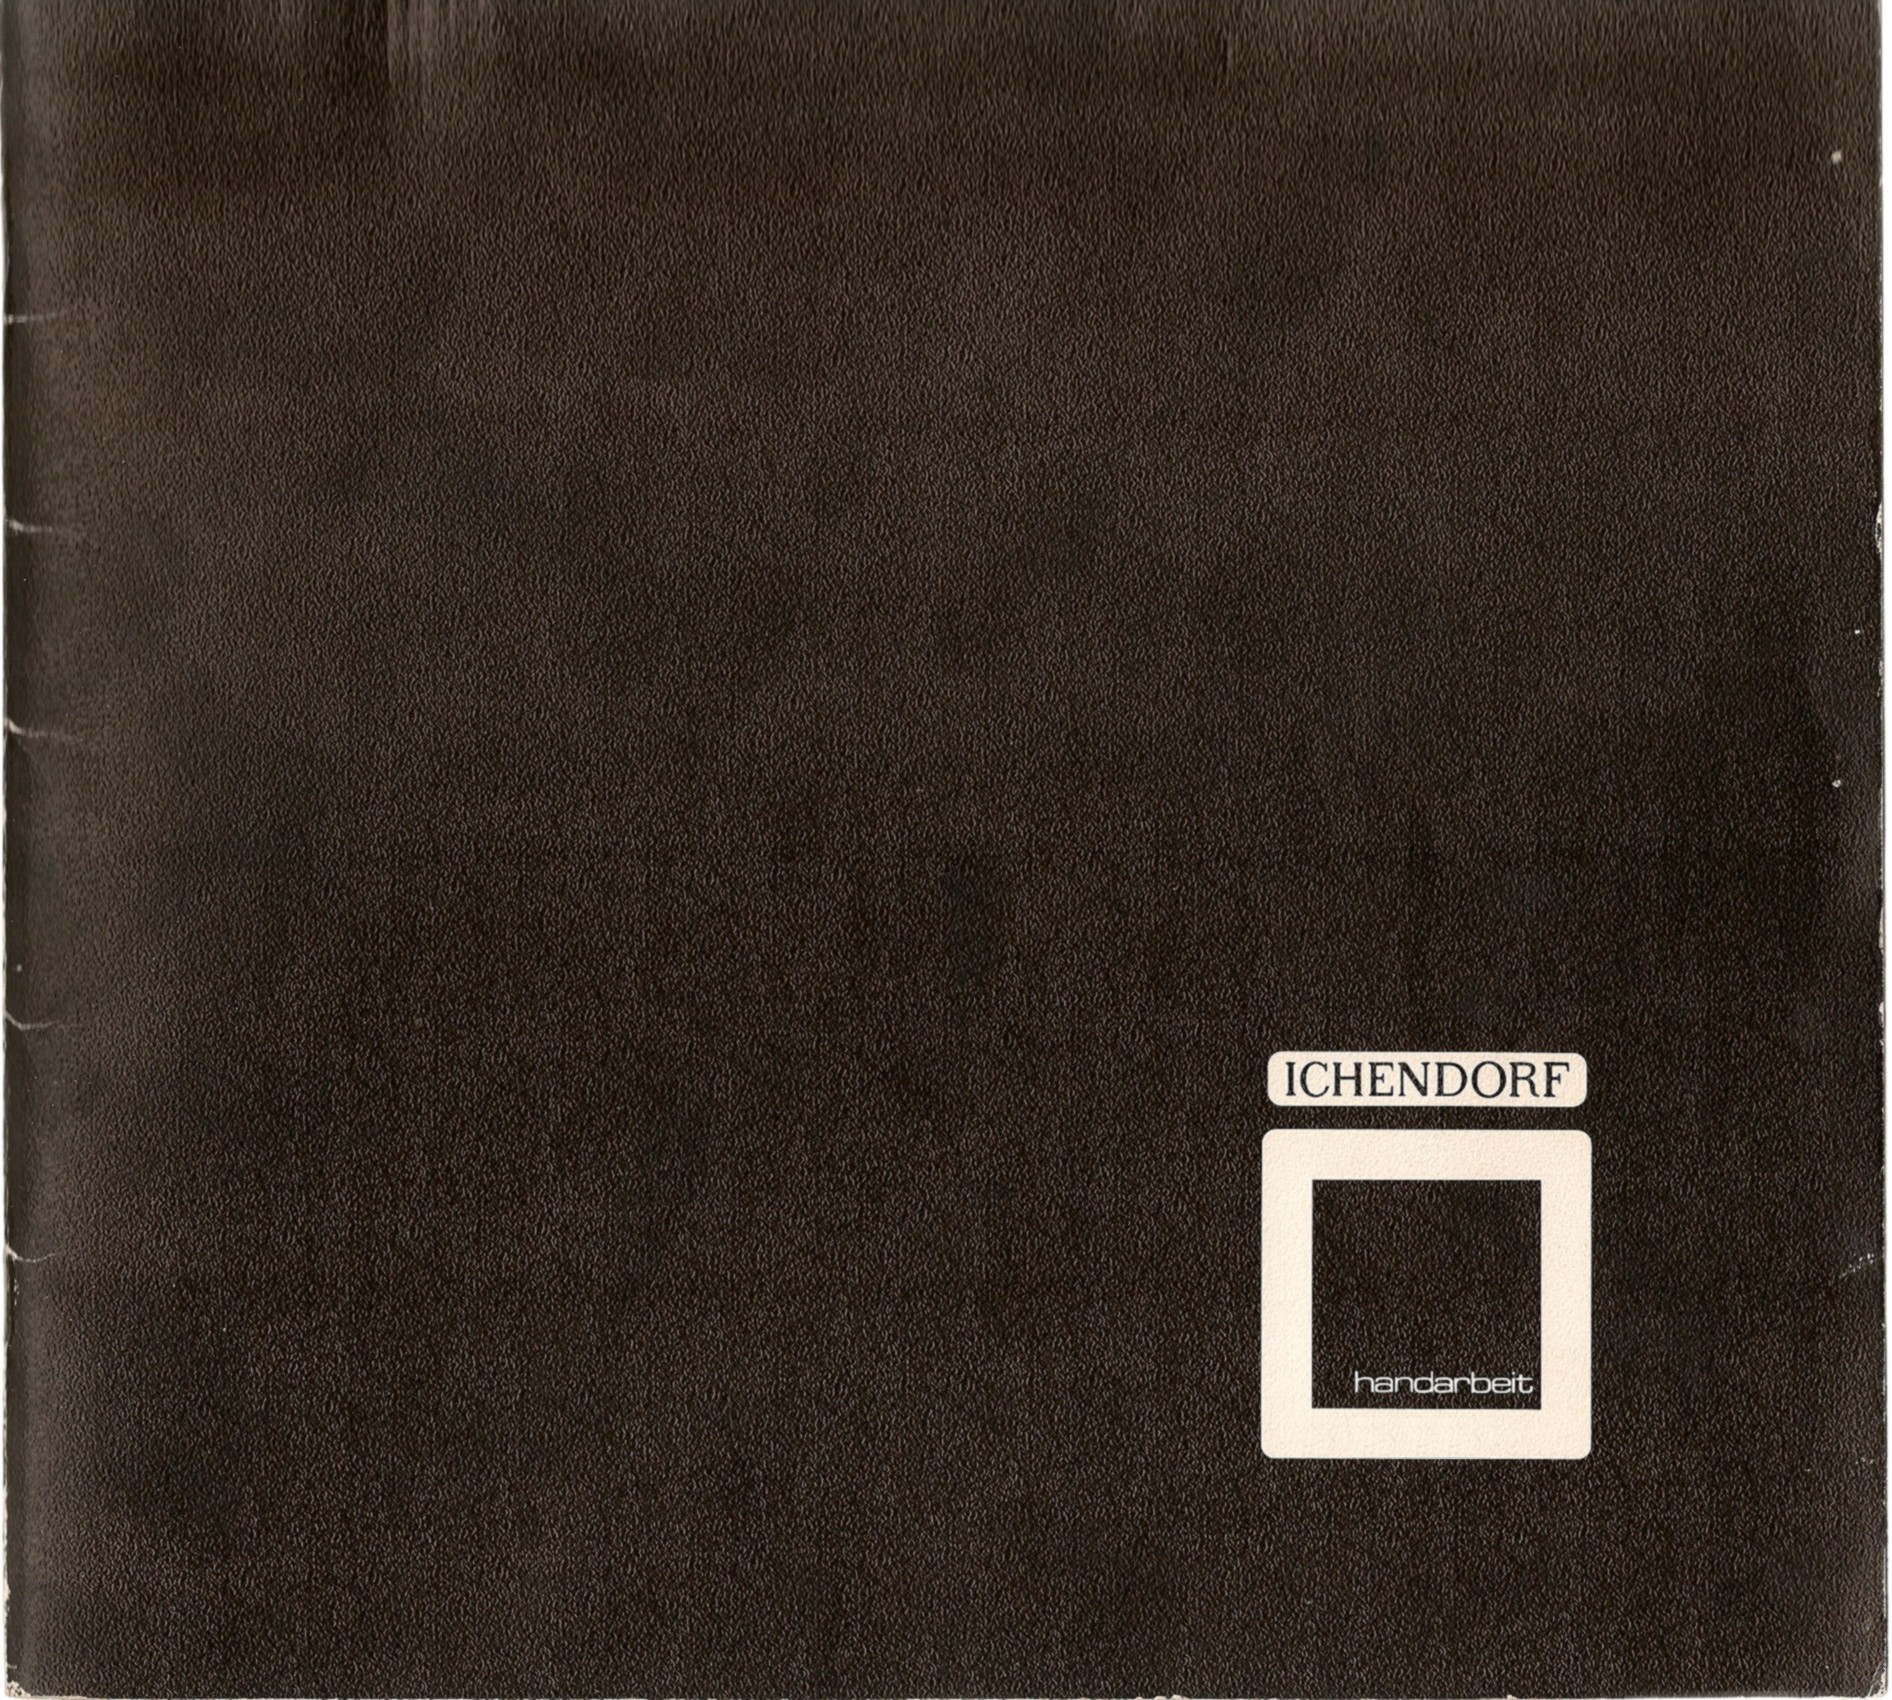 Titelblatt des Katalogs von 1977